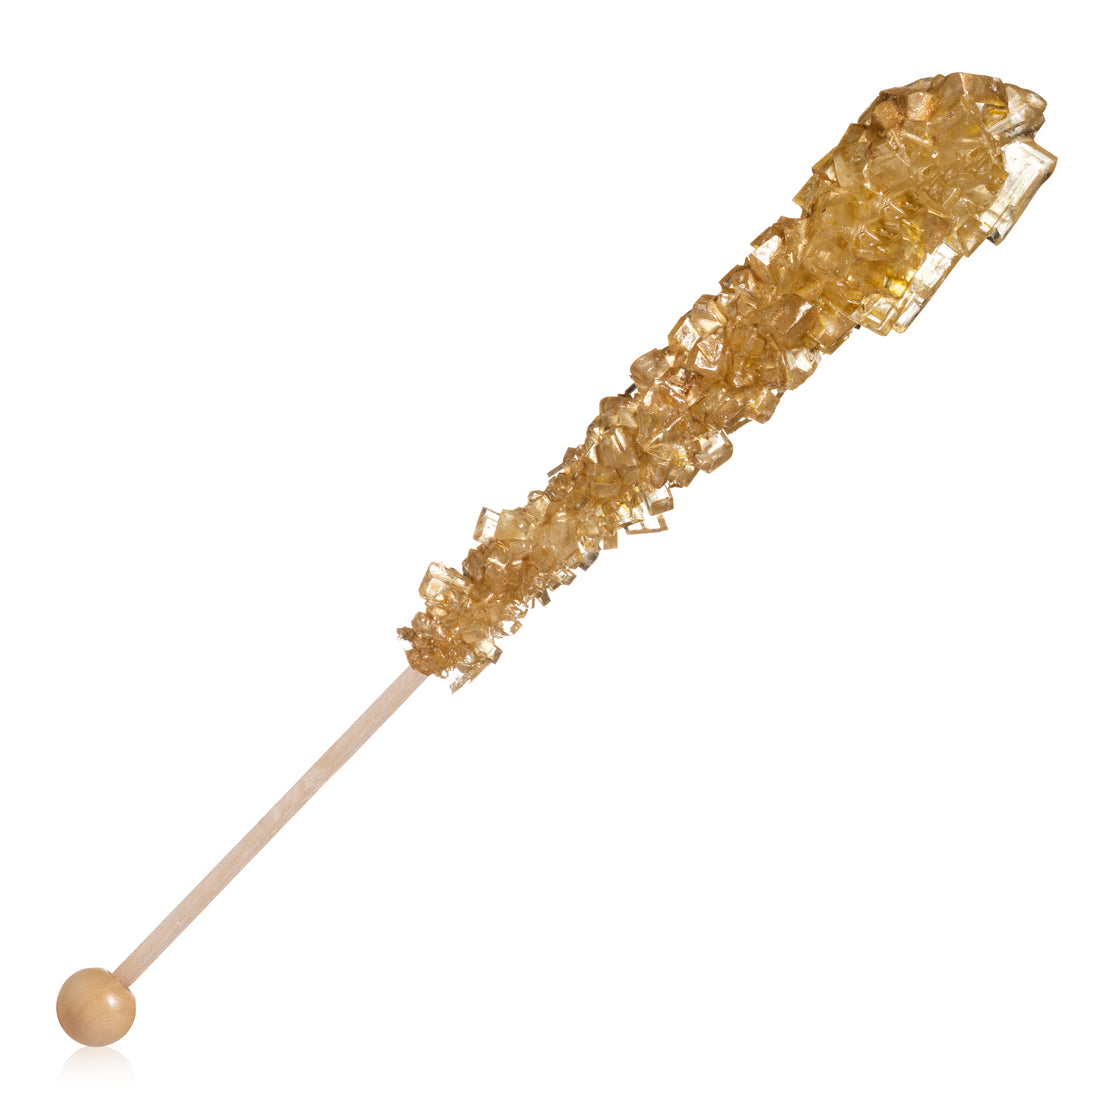 Gold Rock Candy Crystal Sticks - Original Sugar Flavor